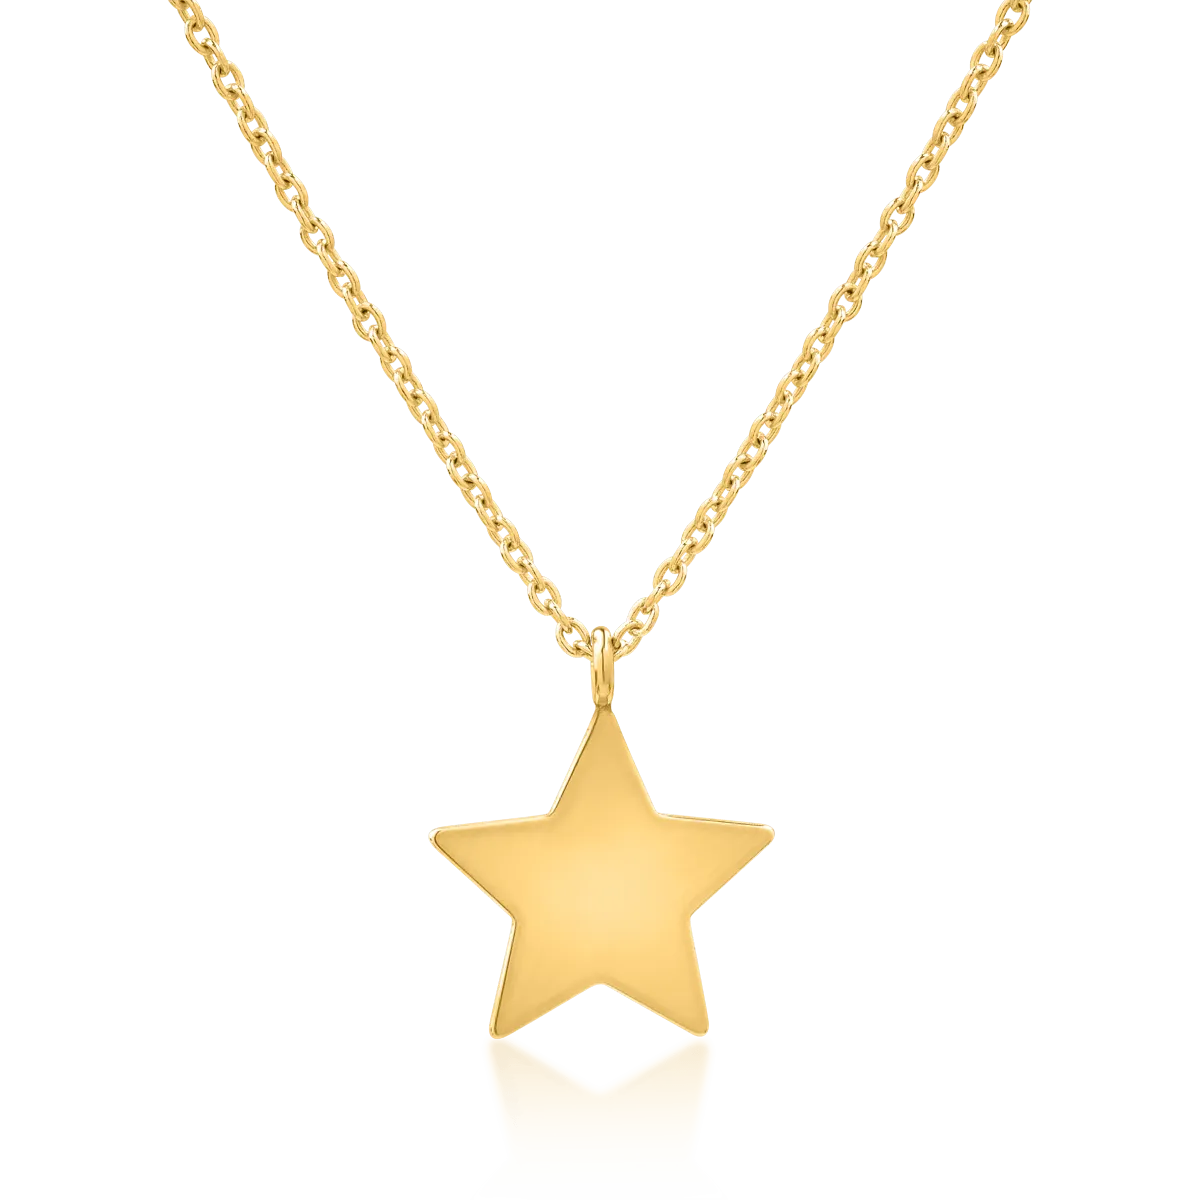 14K yellow gold pendant chain